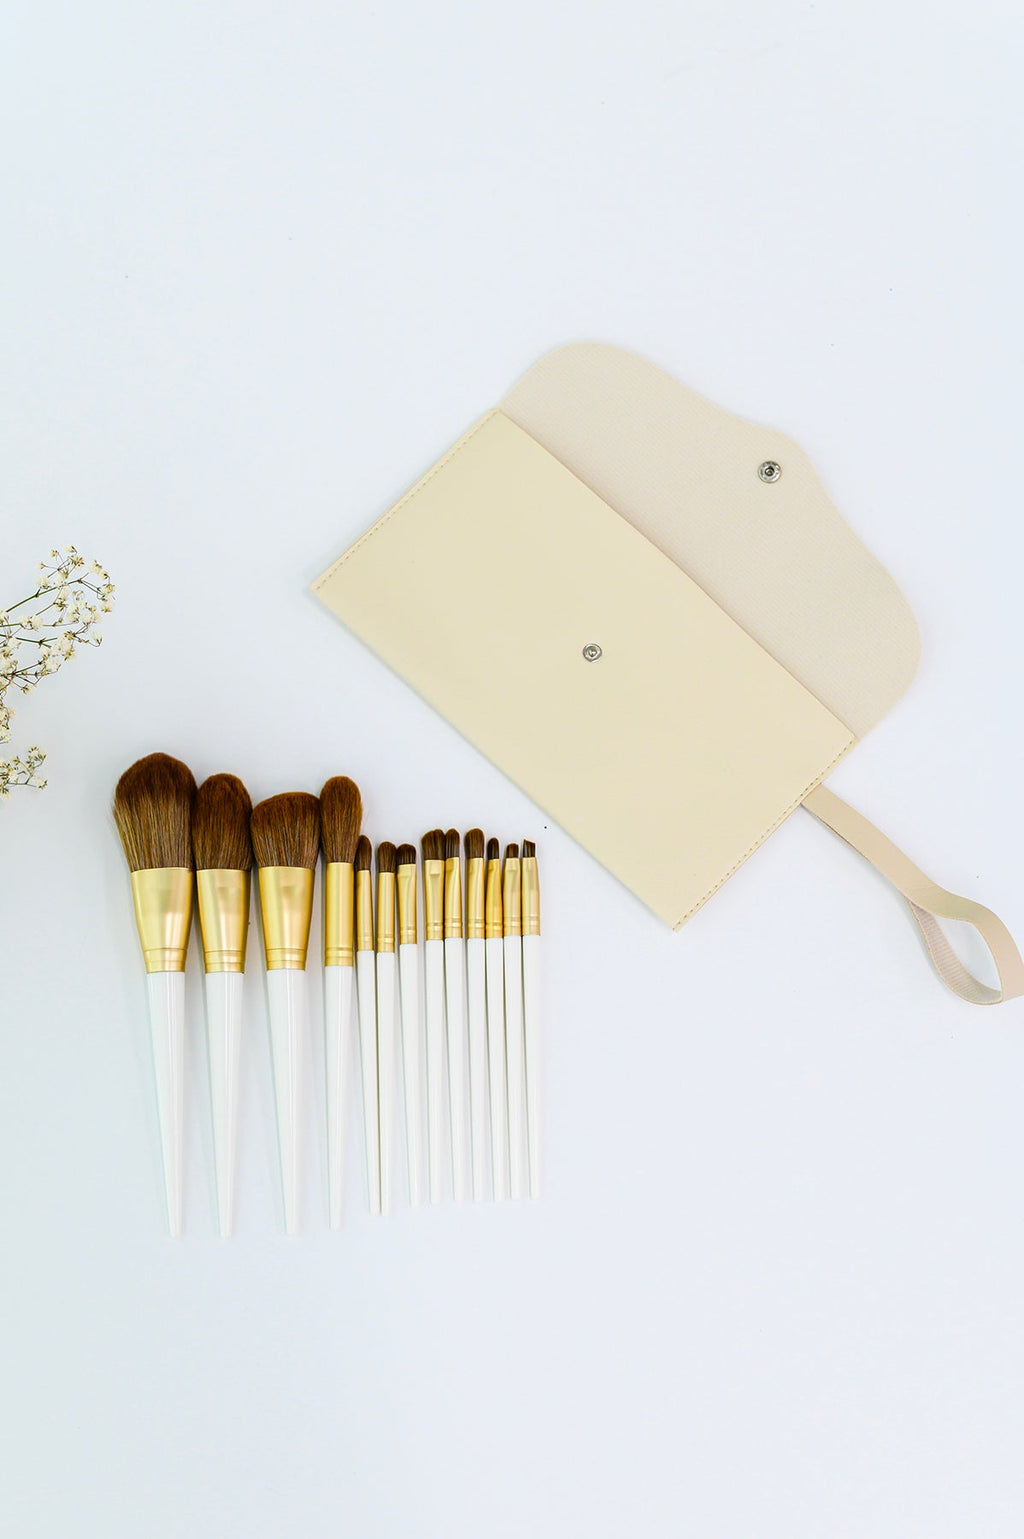 13 Piece Makeup Brush Kit with Case